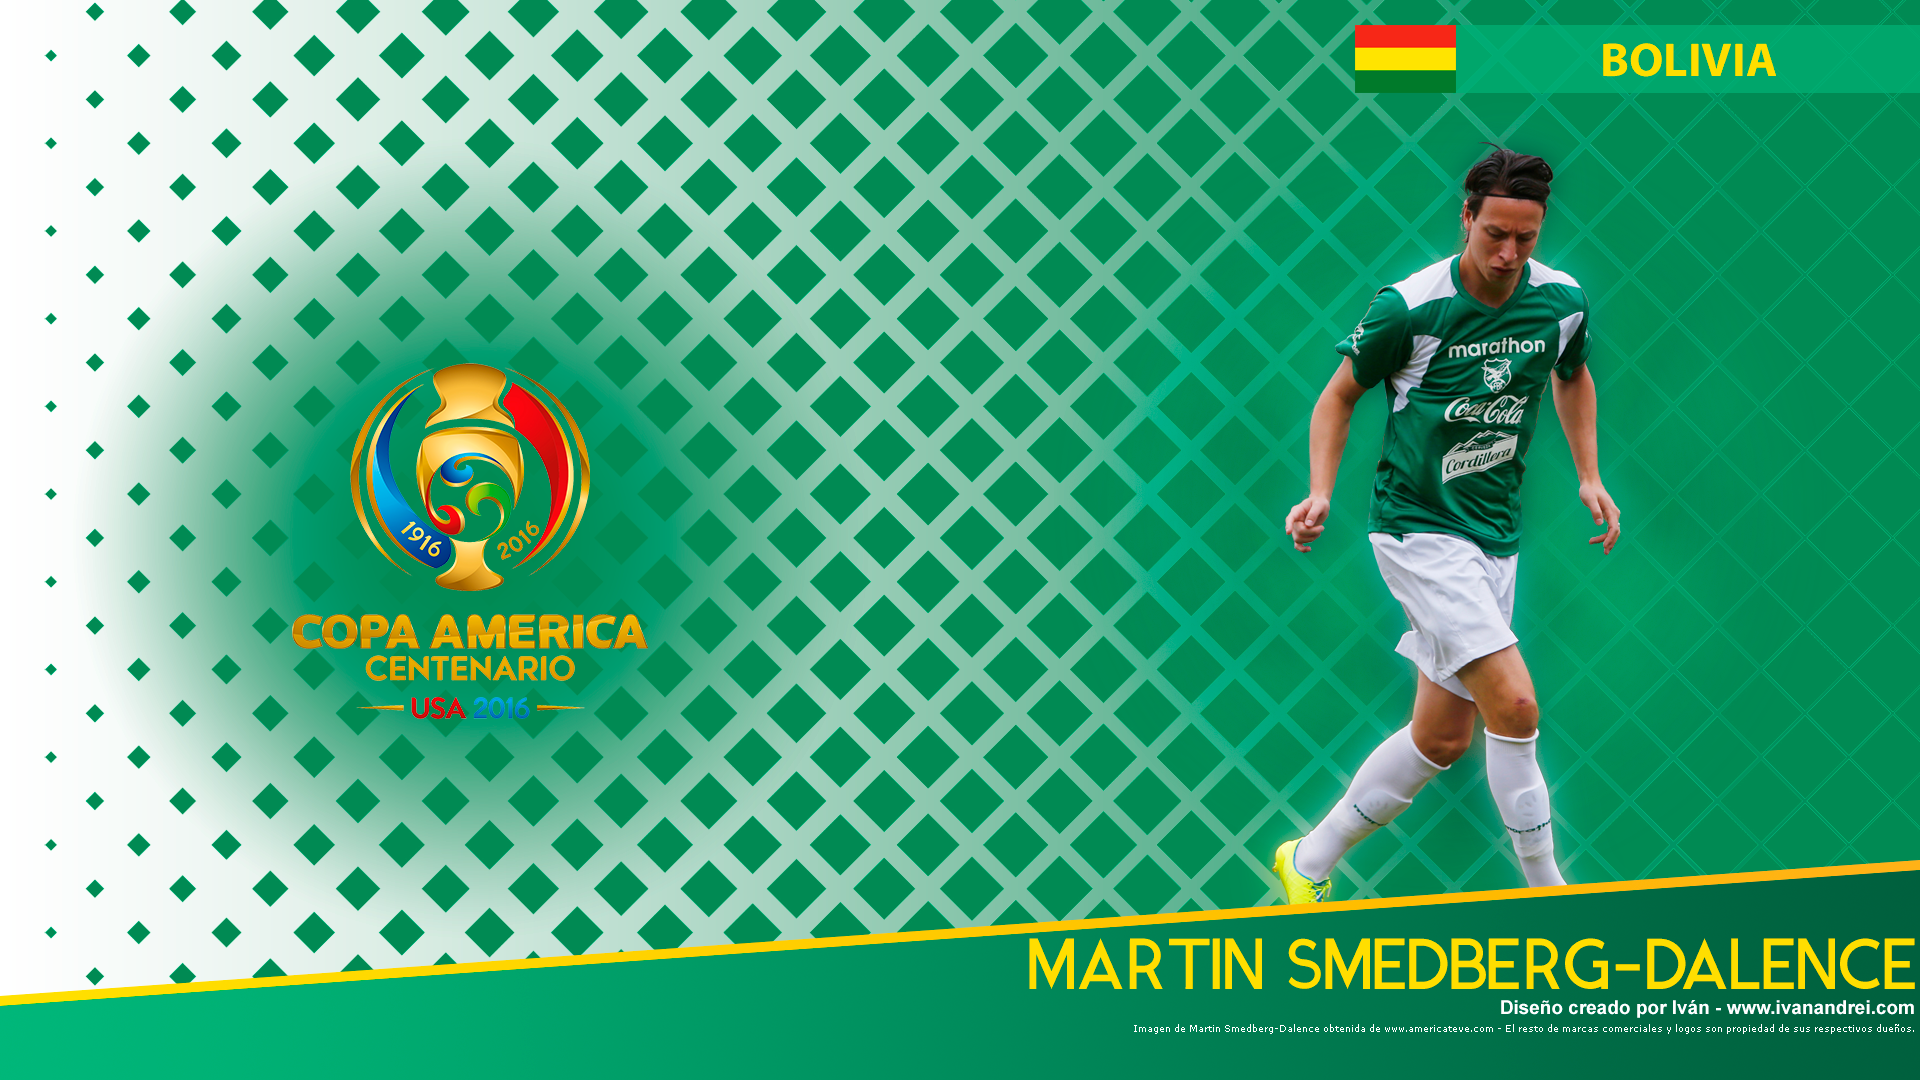 Copa América Centenario USA 2016 - Bolivia (Martin Smedberg Dalence - 1920x1080)